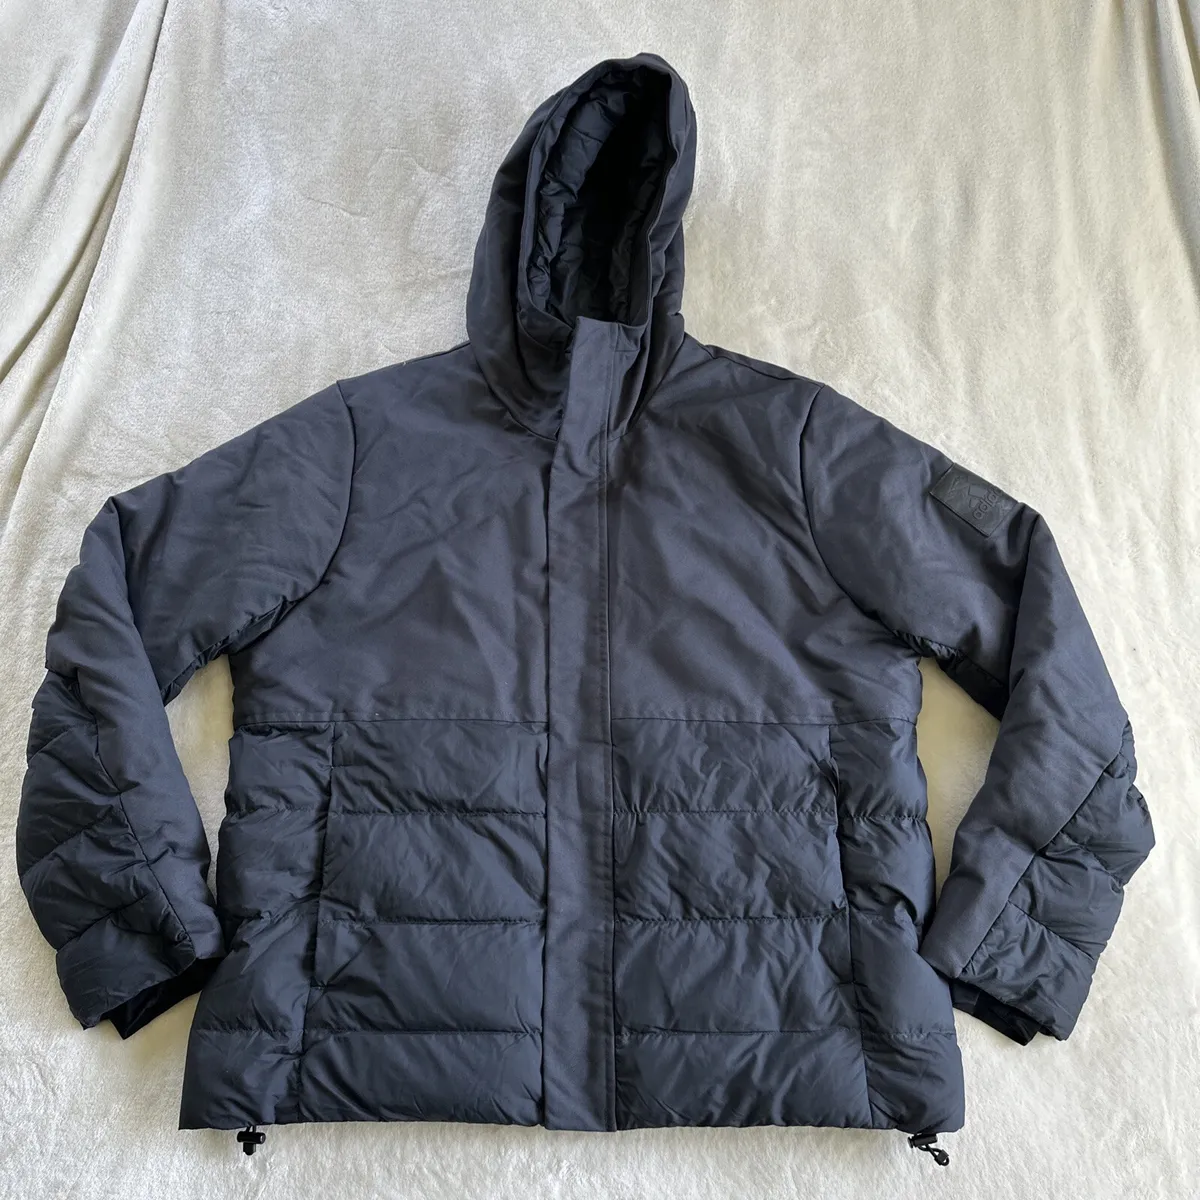 ADIDAS Climawarm Size XL Primaloft Winter Jacket | eBay